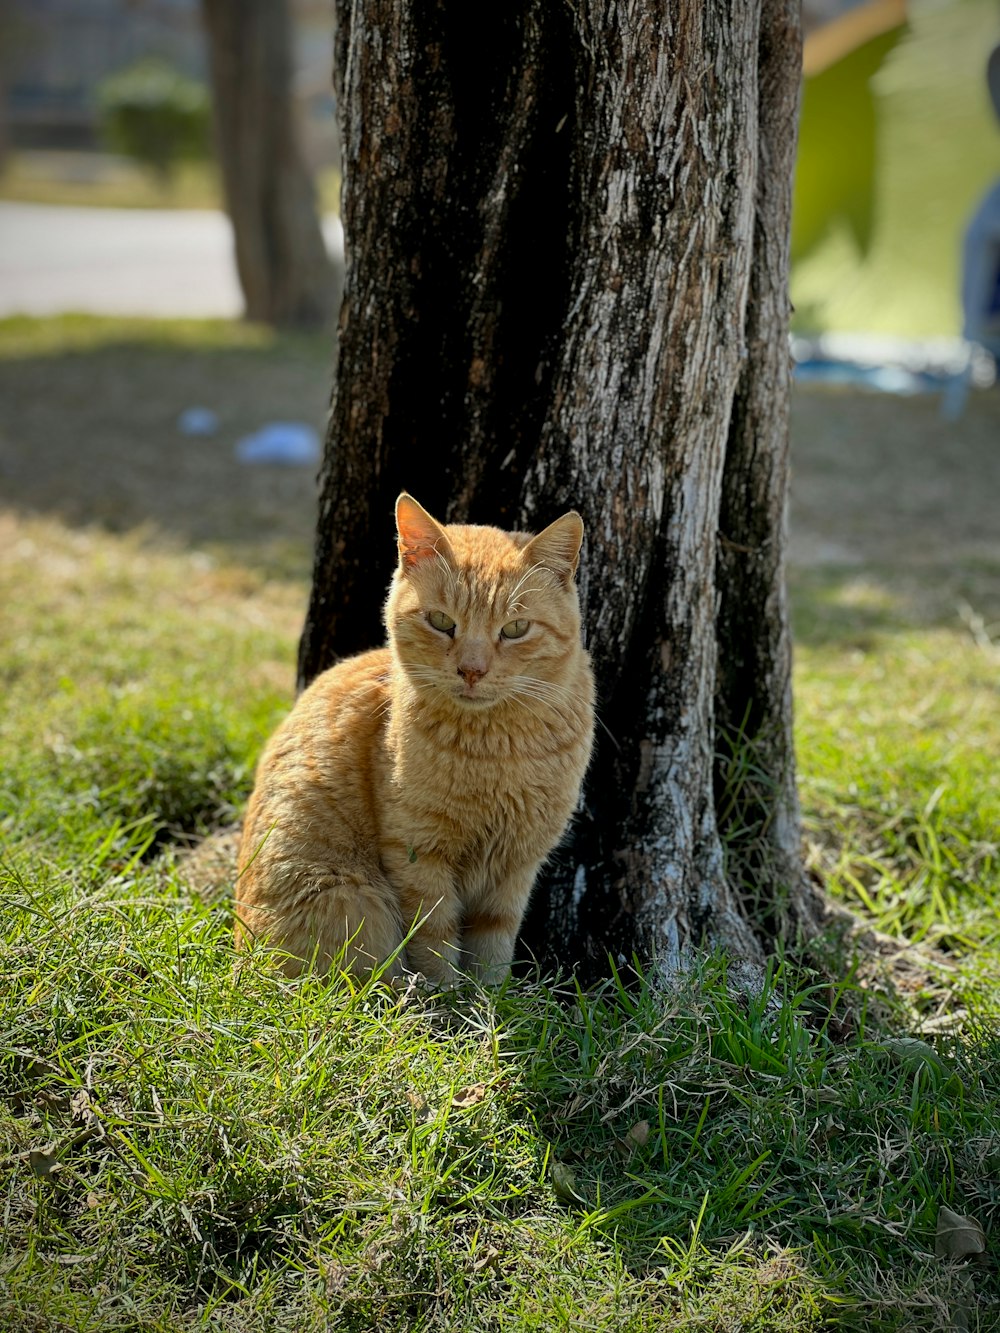 an orange cat sitting under a tree in the grass